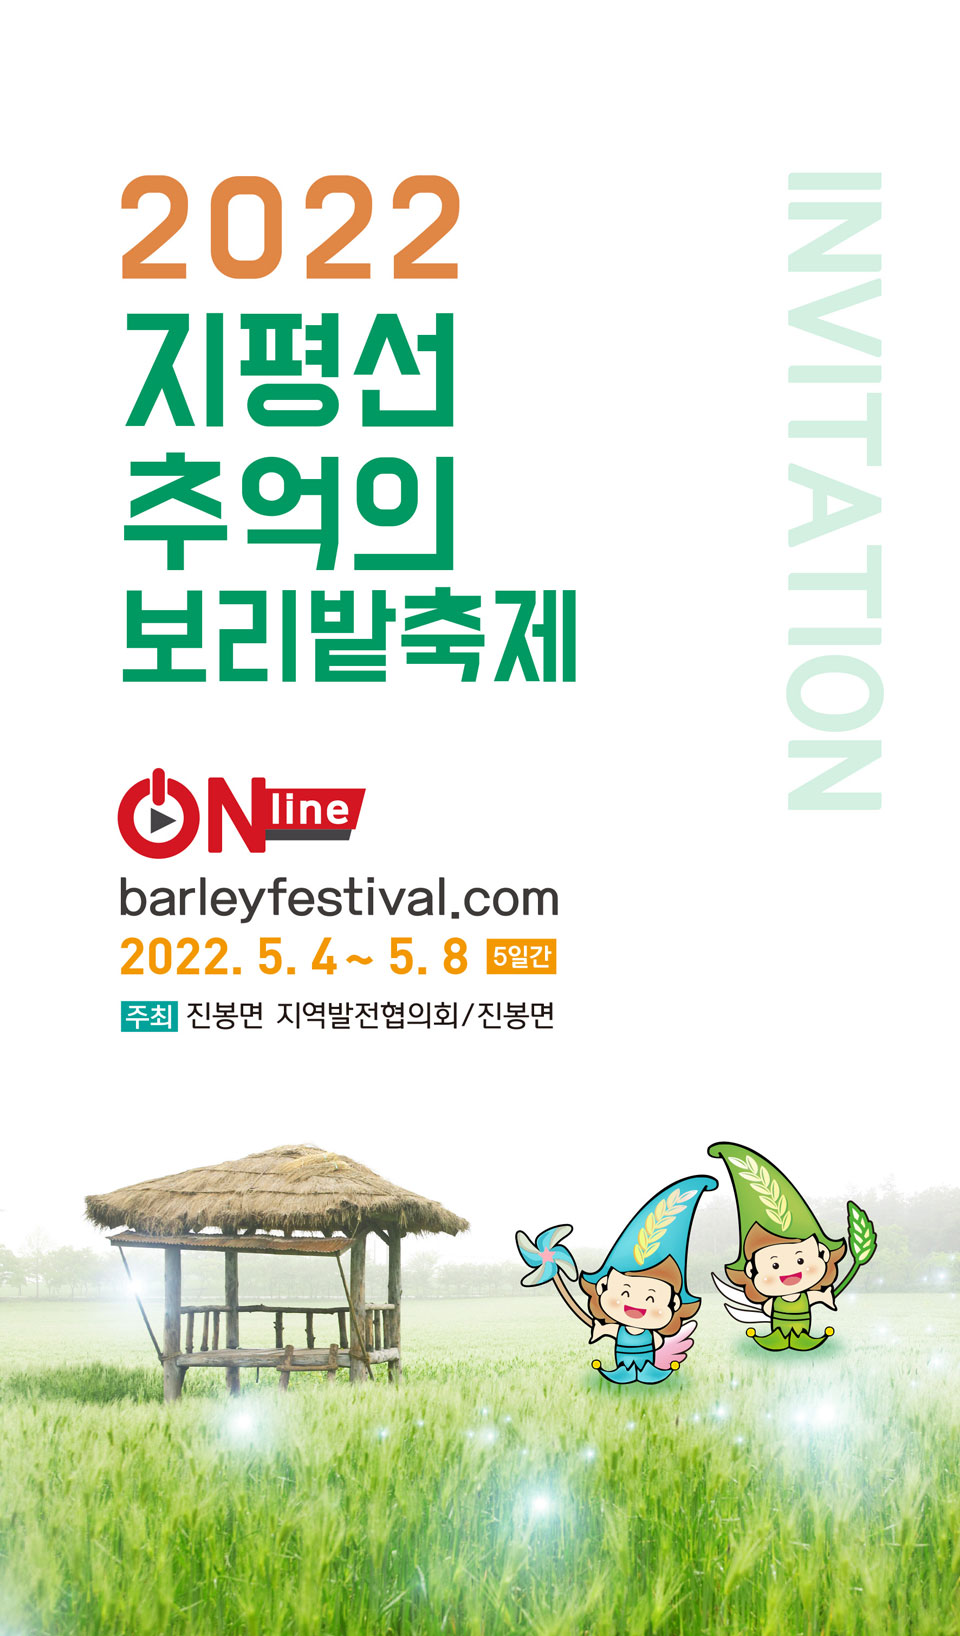 INVITATION 2022 지평선 추억의 보리밭축제 ONline barleyfestival.com 2022. 5. 4 ~ 5. 8 5일간 주최: 진봉면 지역발전협의회/진봉면